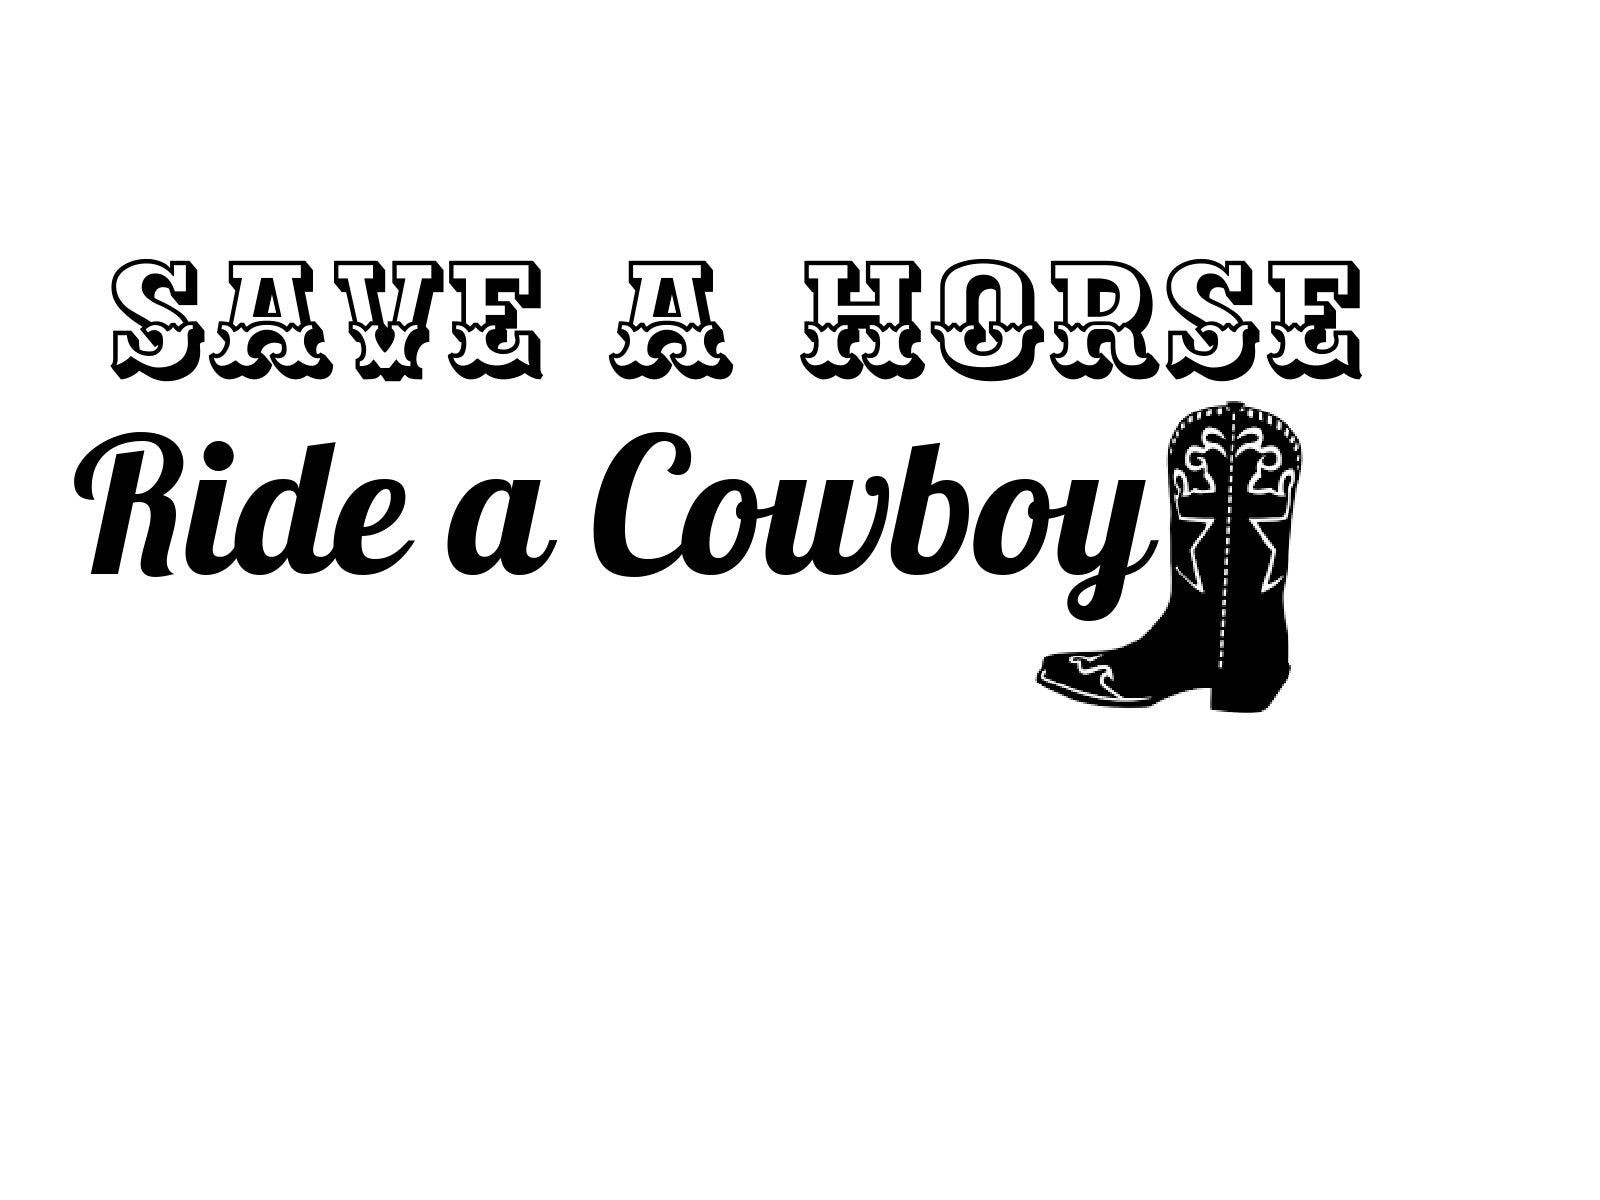 Save A Horse Ride A Cowboy